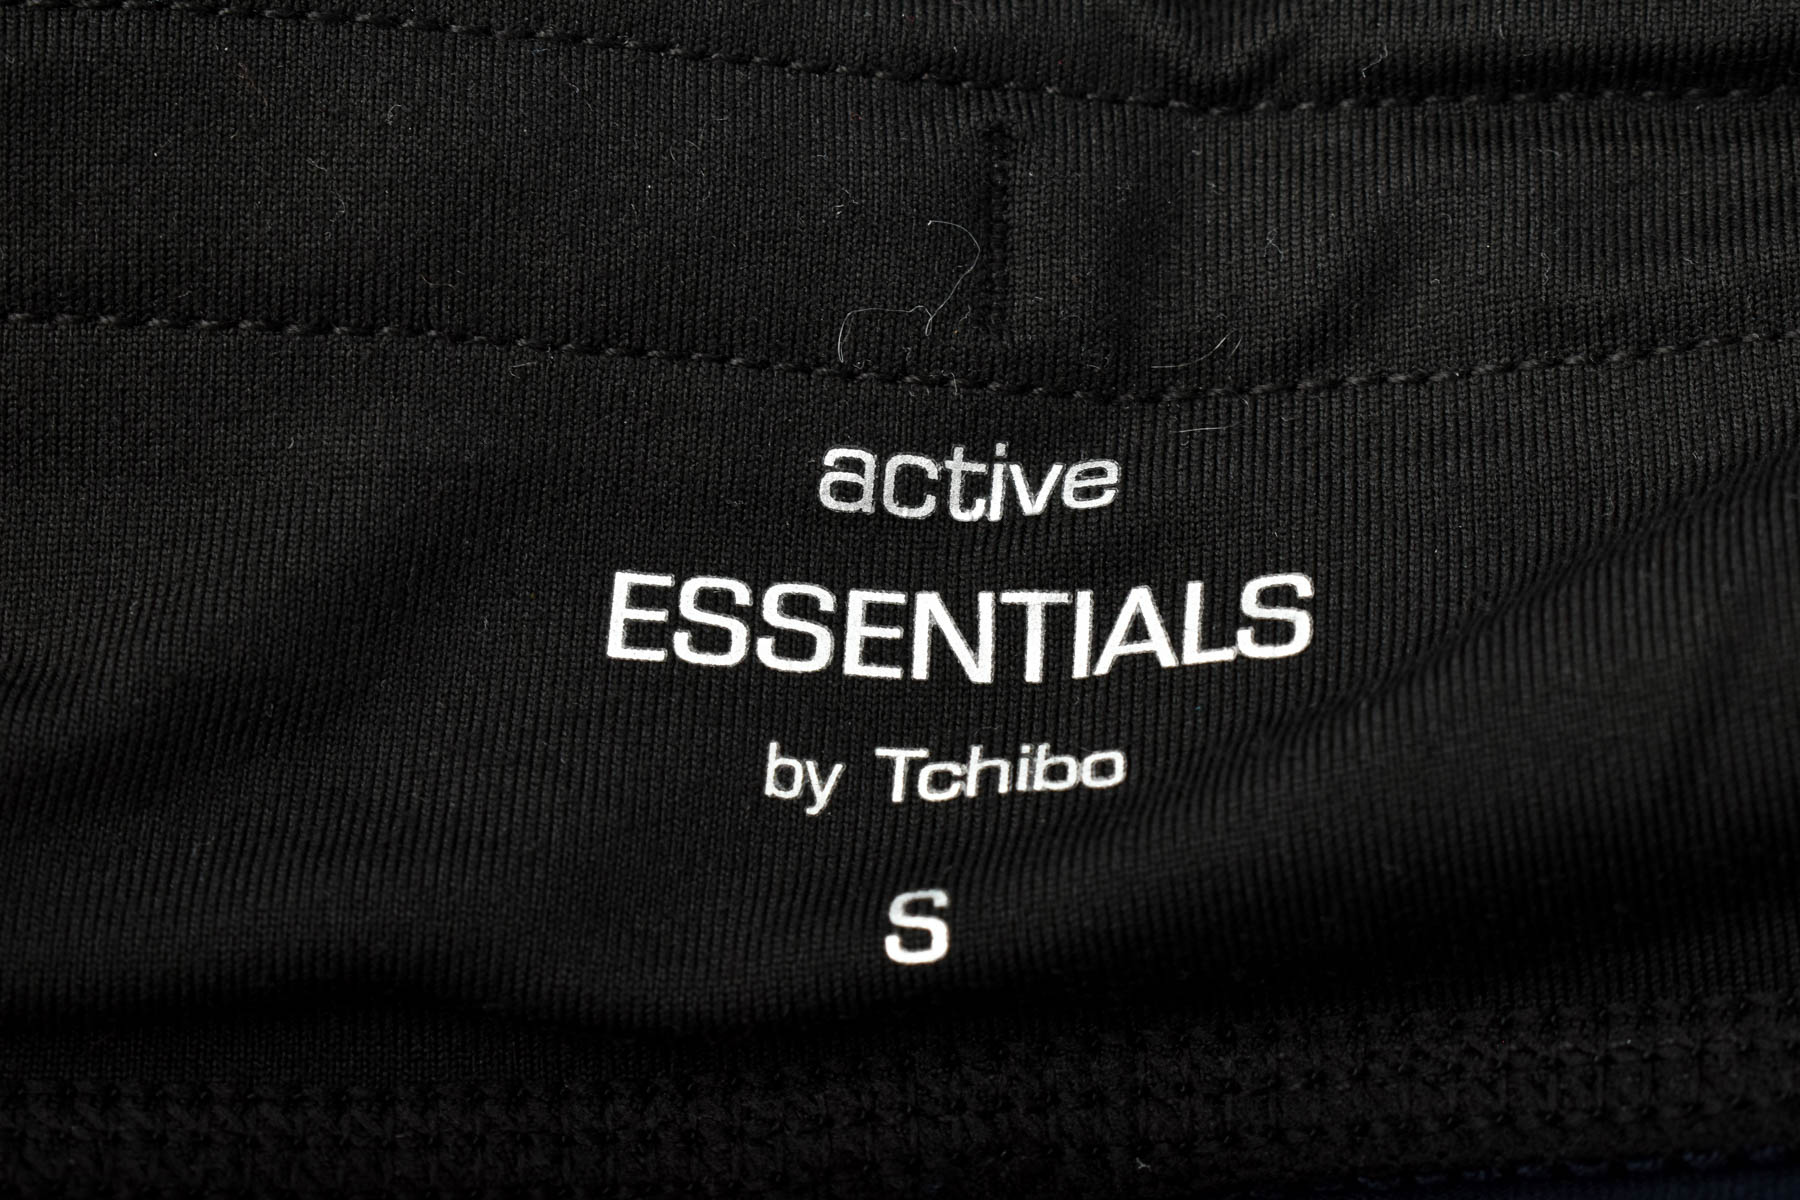 Trening pentru damă - Active Essentials by Tchibo - 2